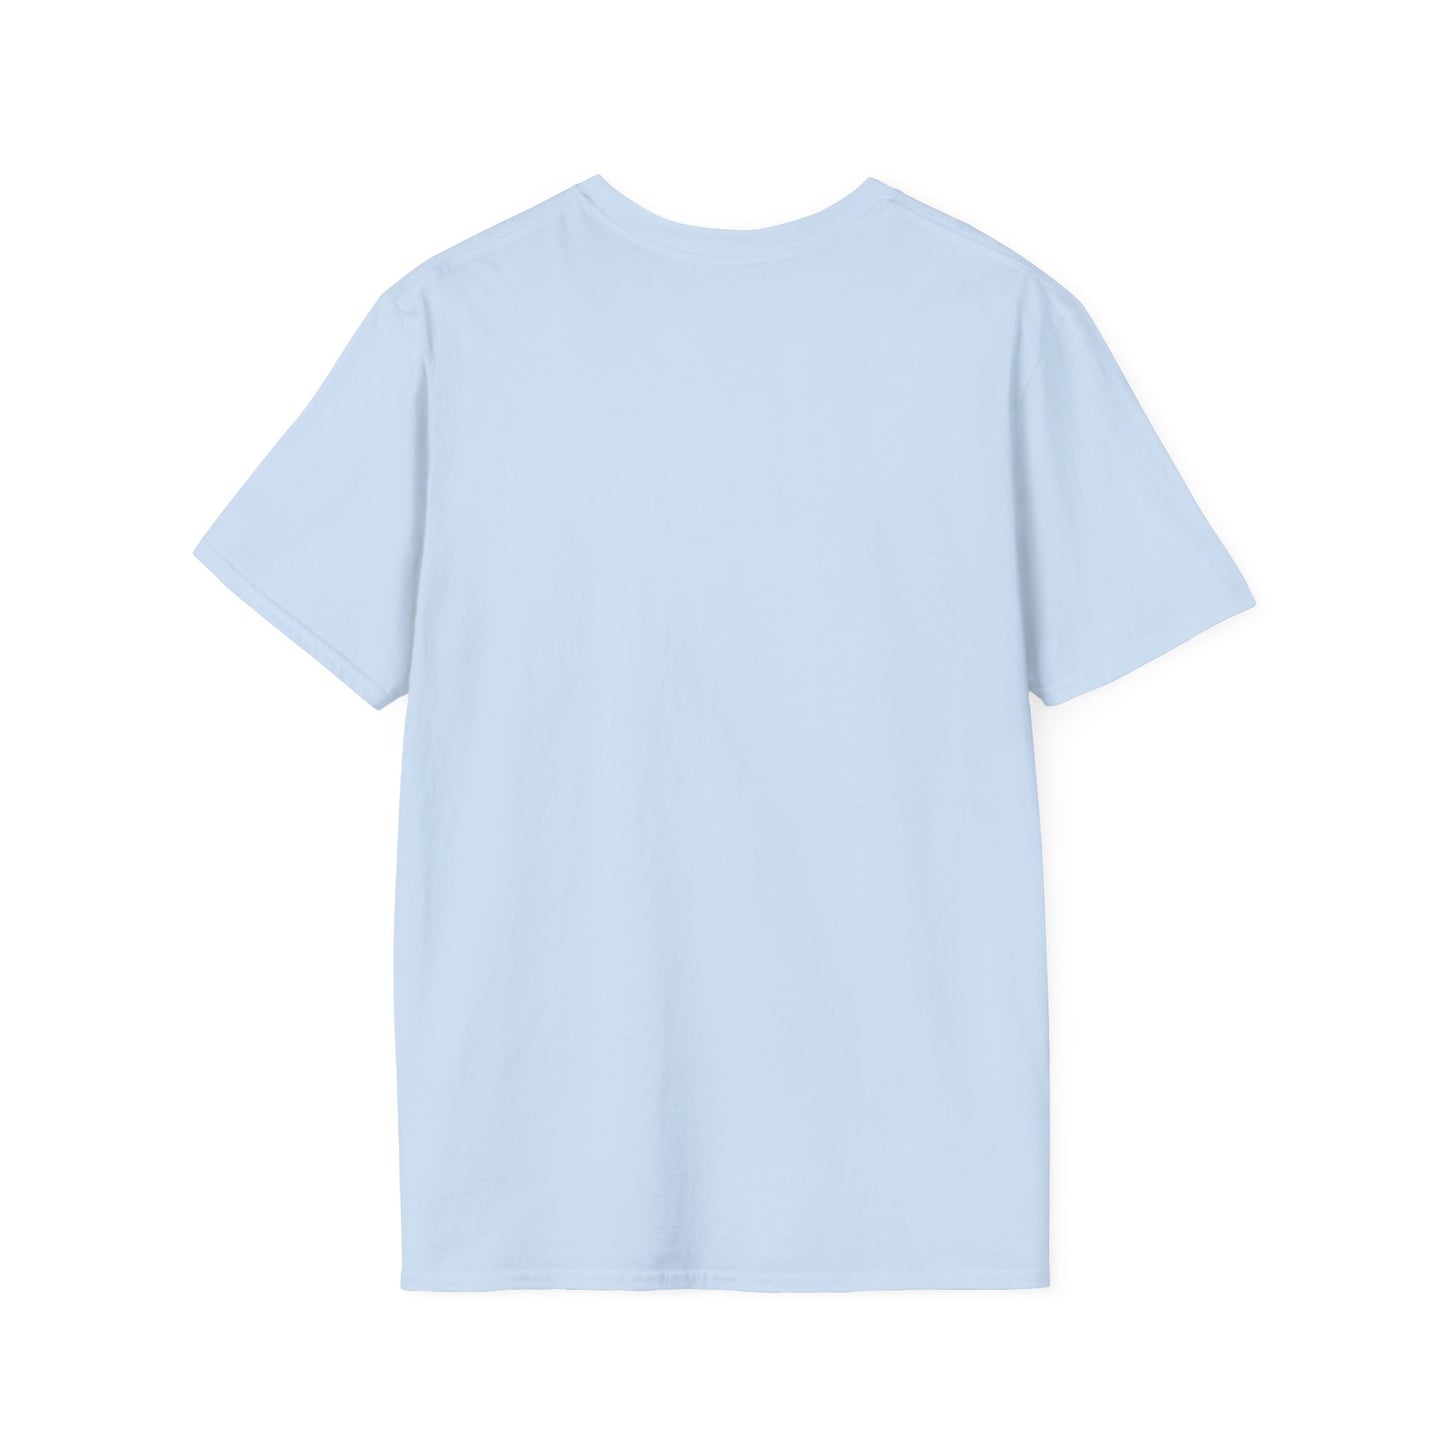 Certified Geek WAP White Font Unisex Softstyle T-Shirt